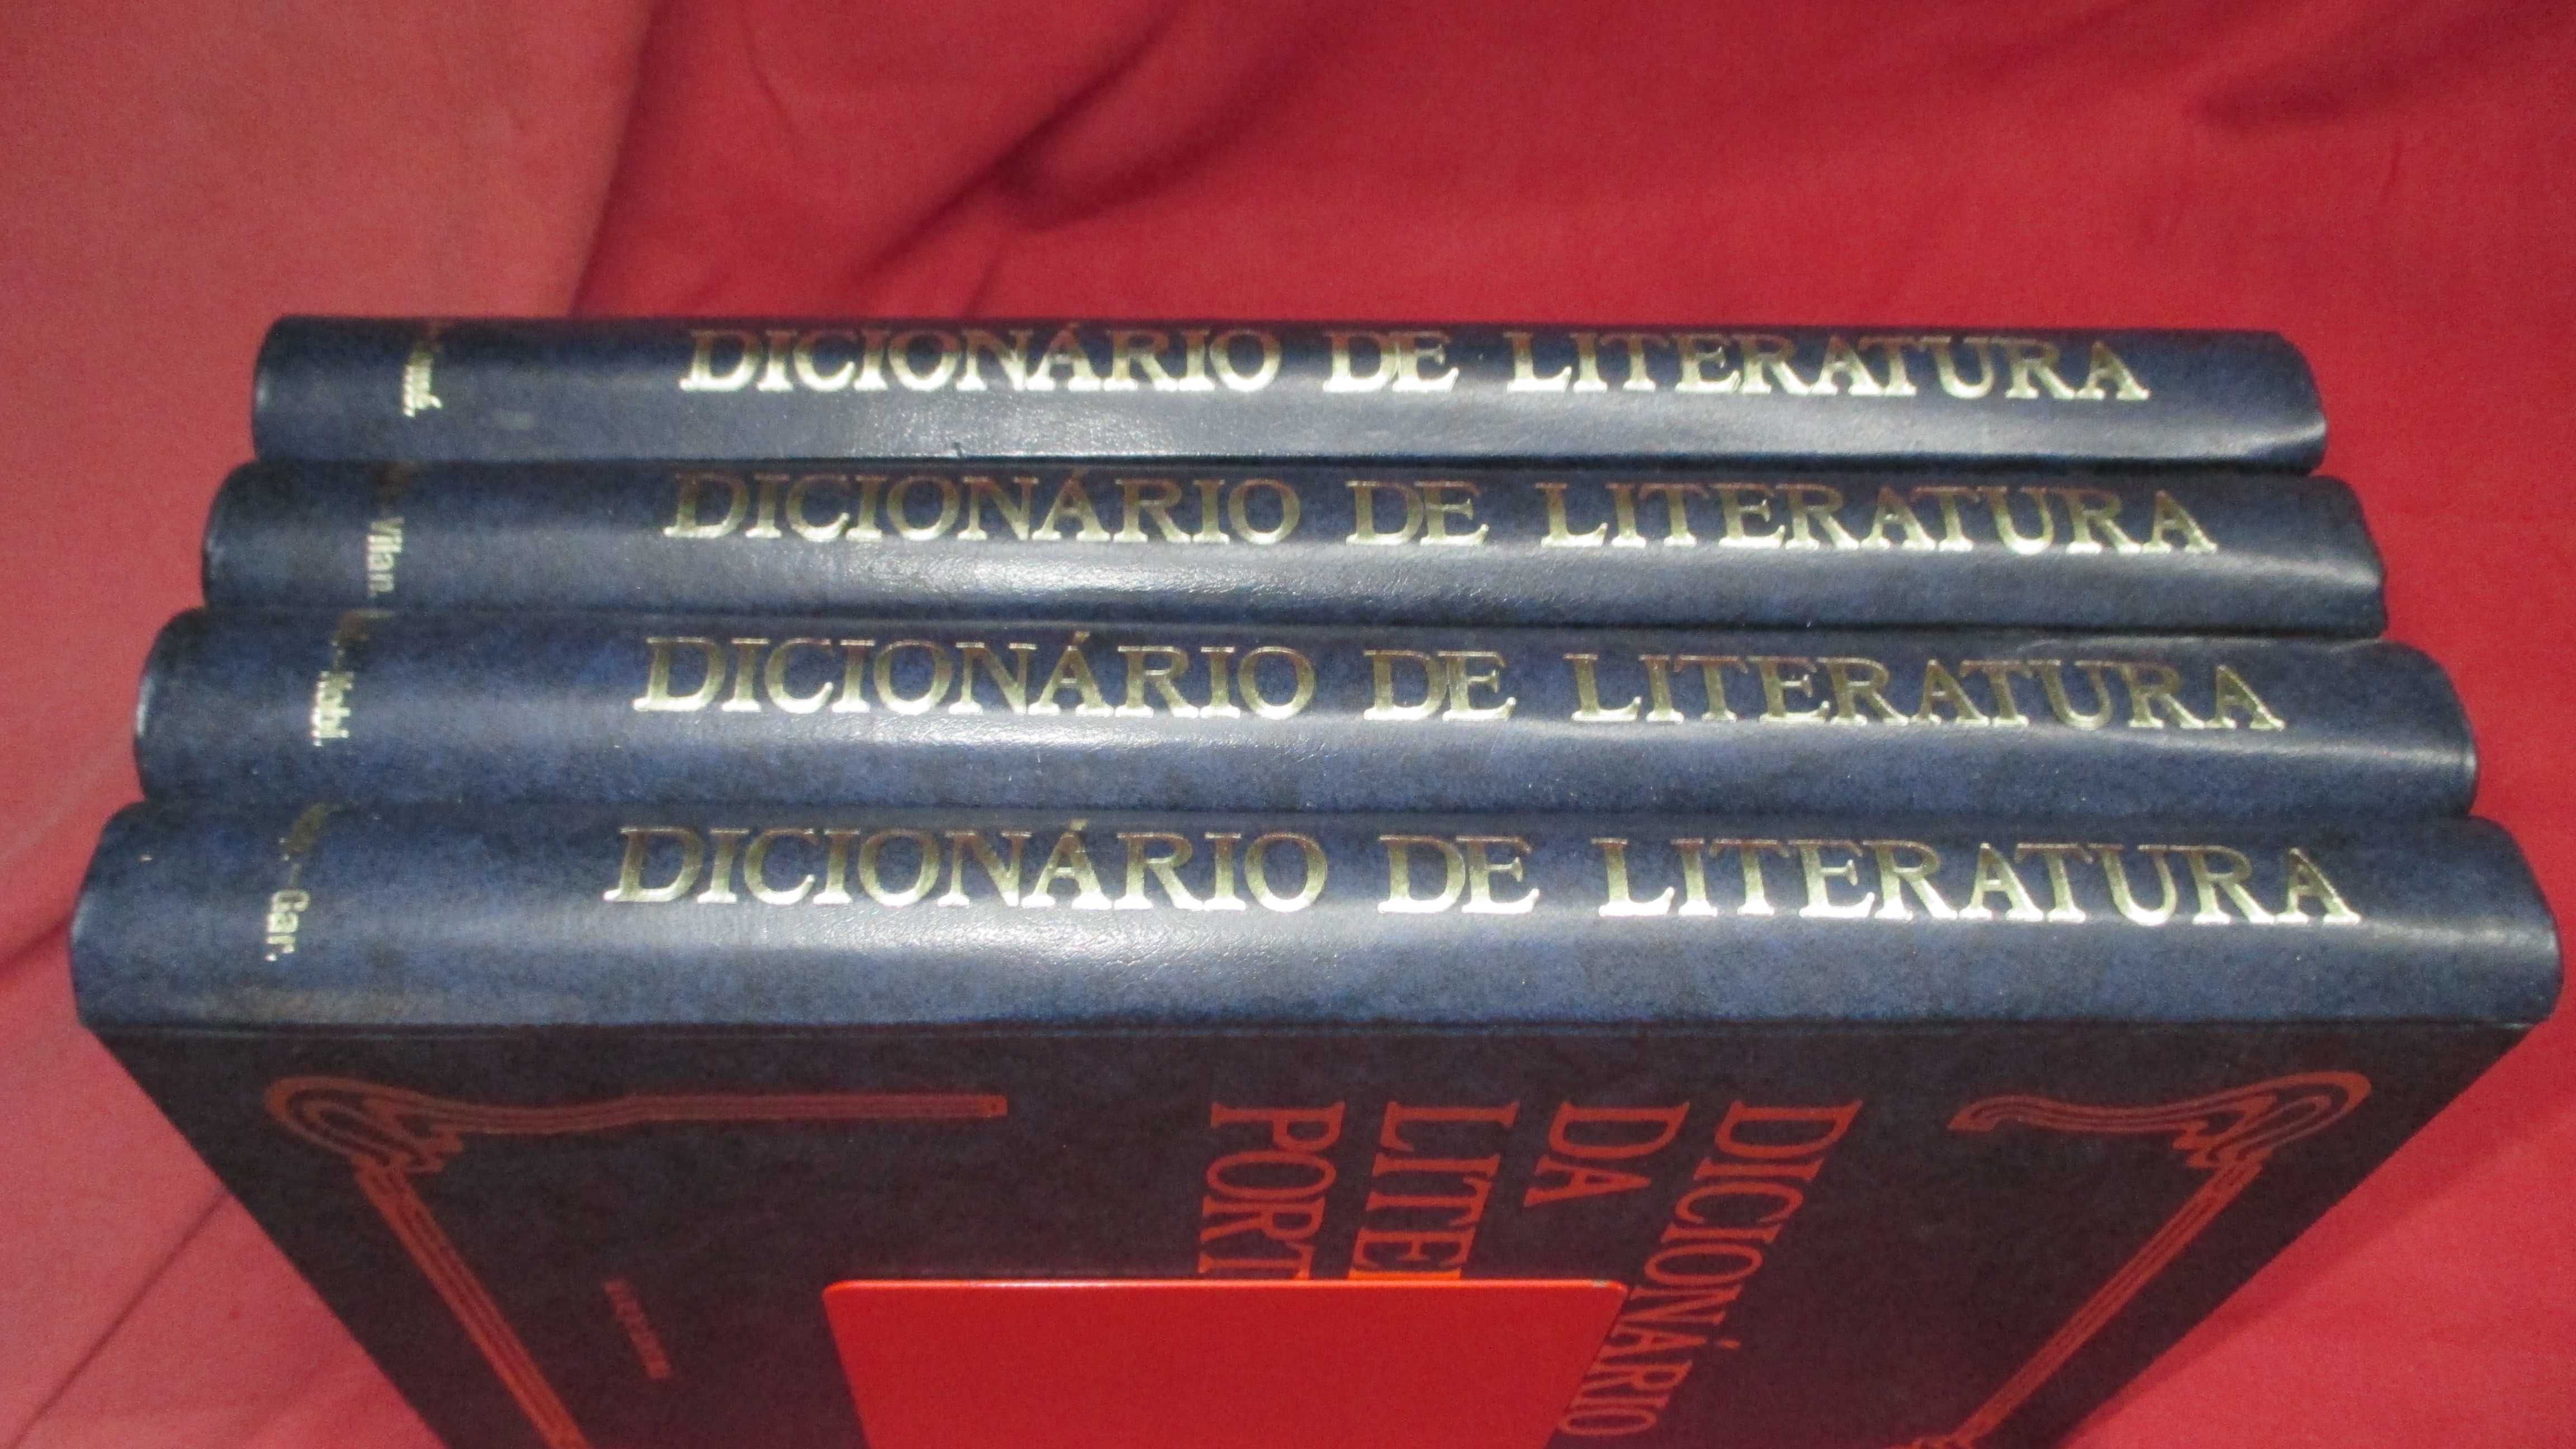 Dicionario da Literatura Portuguesa ( José Correia do Souto  )